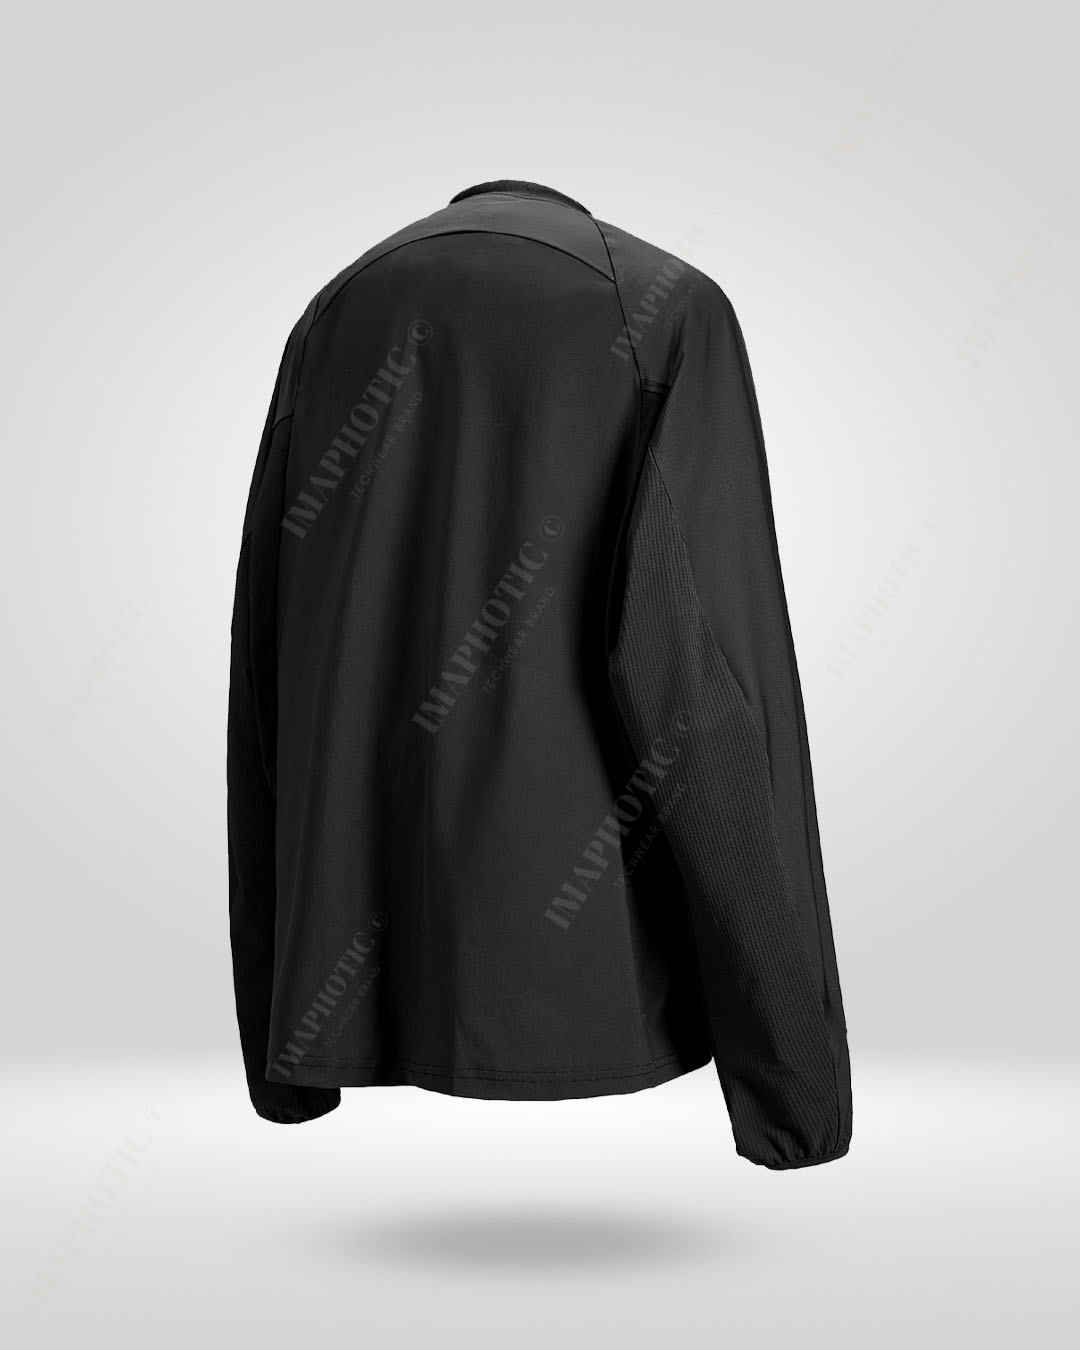 Tactical Raglan Sleeved Black Sweatshirt - For the Modern Trailblazer